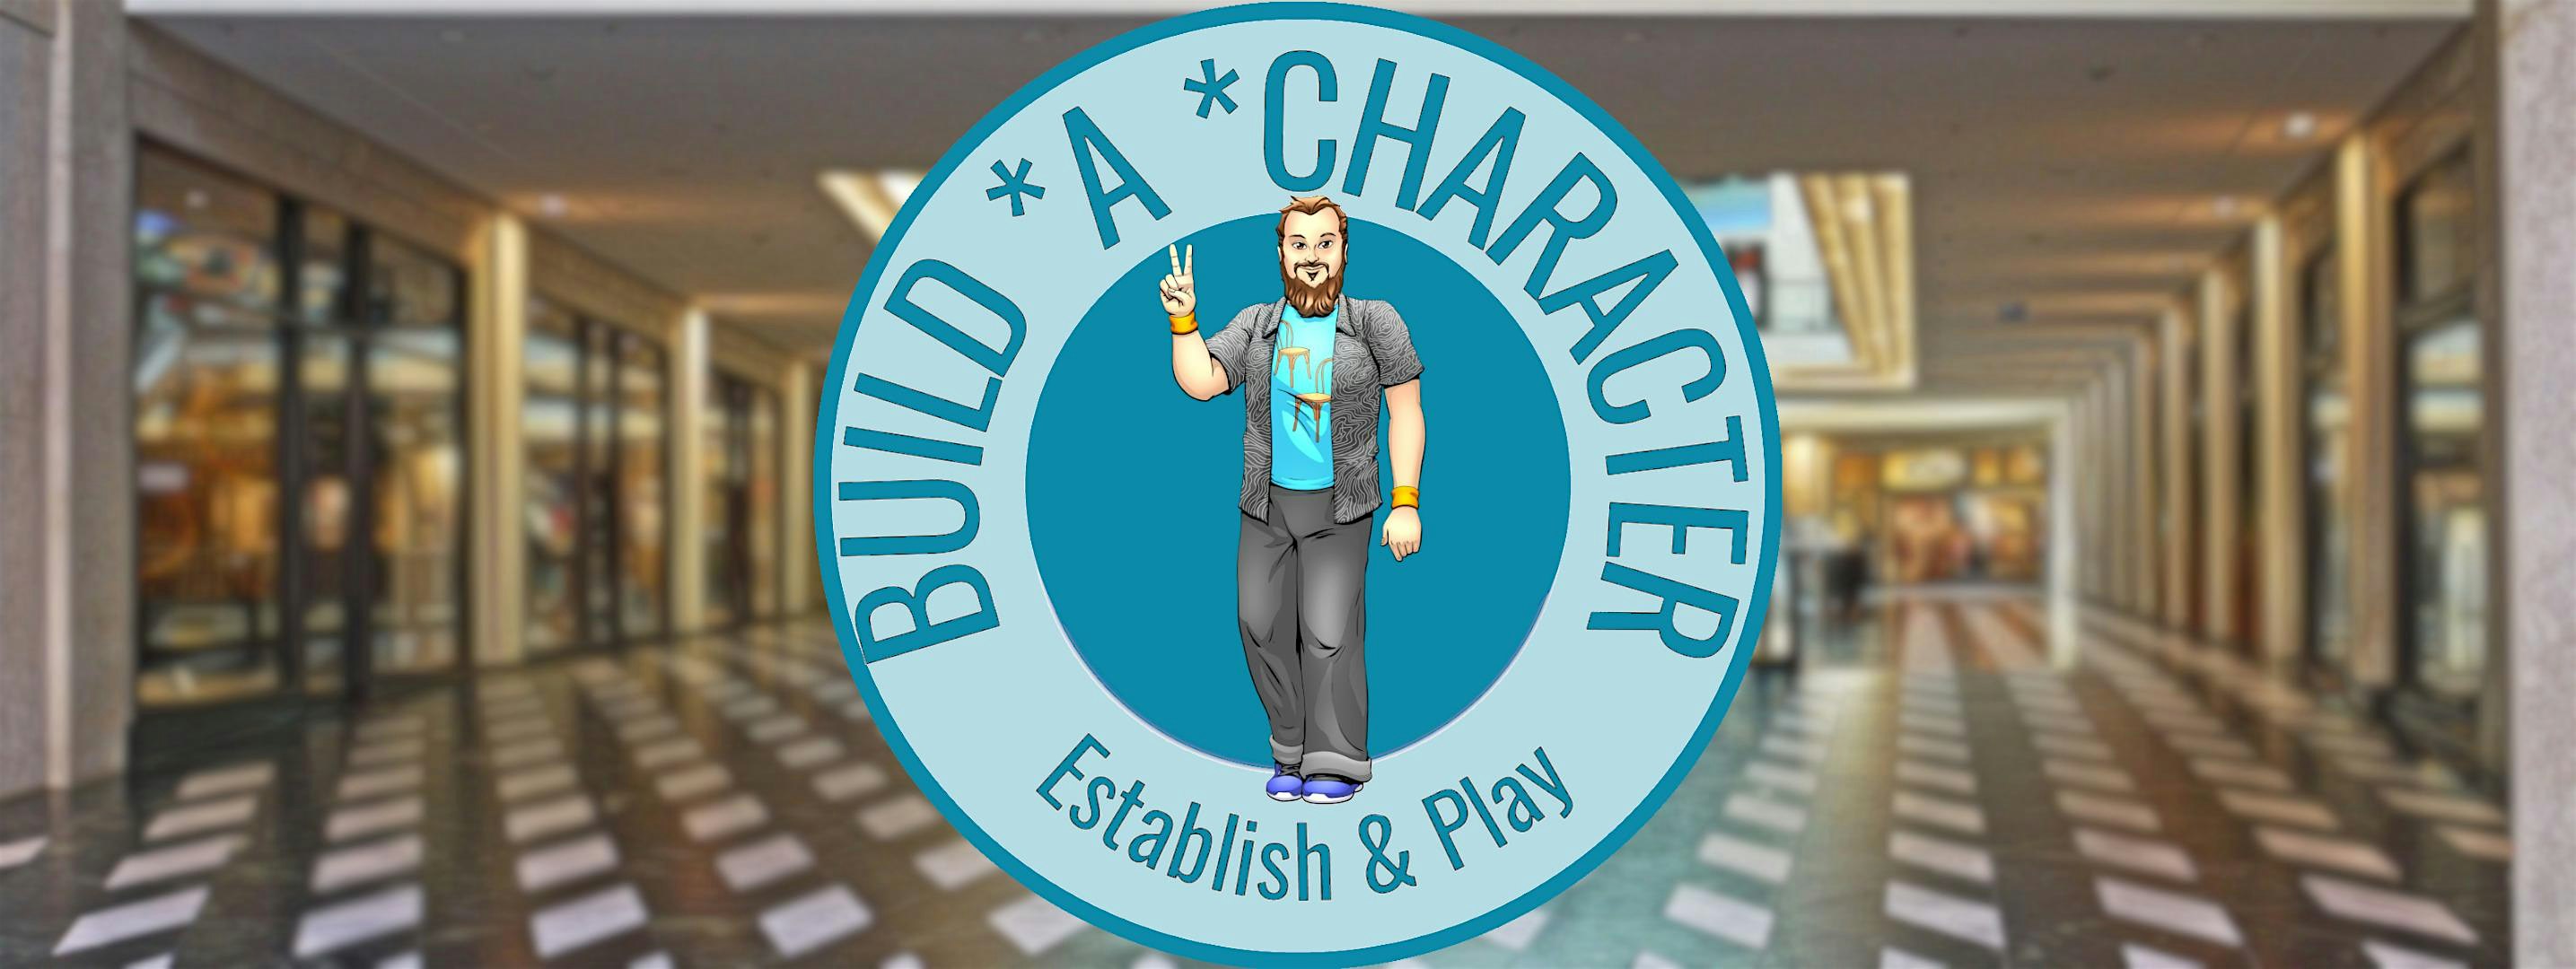 [Workshop] Build A Character: Establish & Play with Josh Wells